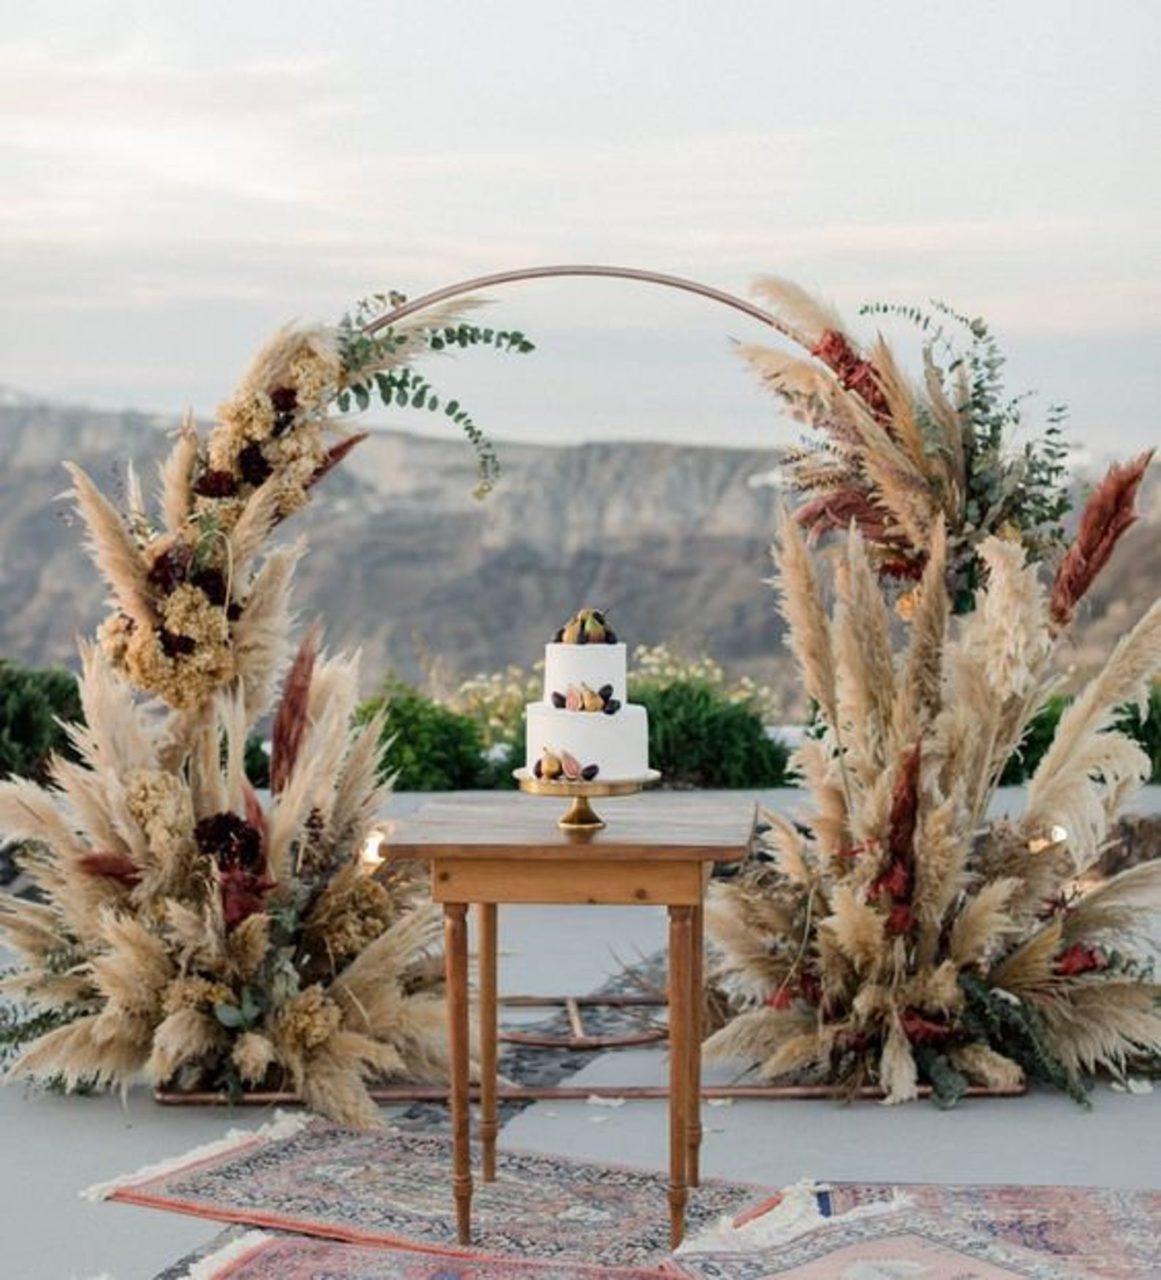 Round wedding ceremony arch with dried florals as backyard wedding decor